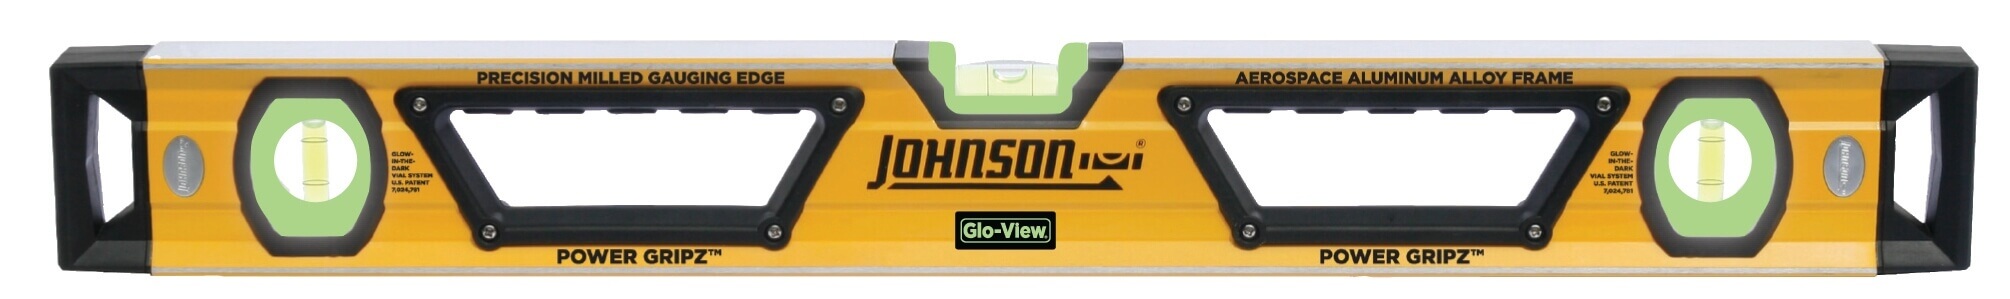 Johnson Level 78 Magnetic Glo-View Heavy Duty Aluminum Box Level 1718-7800